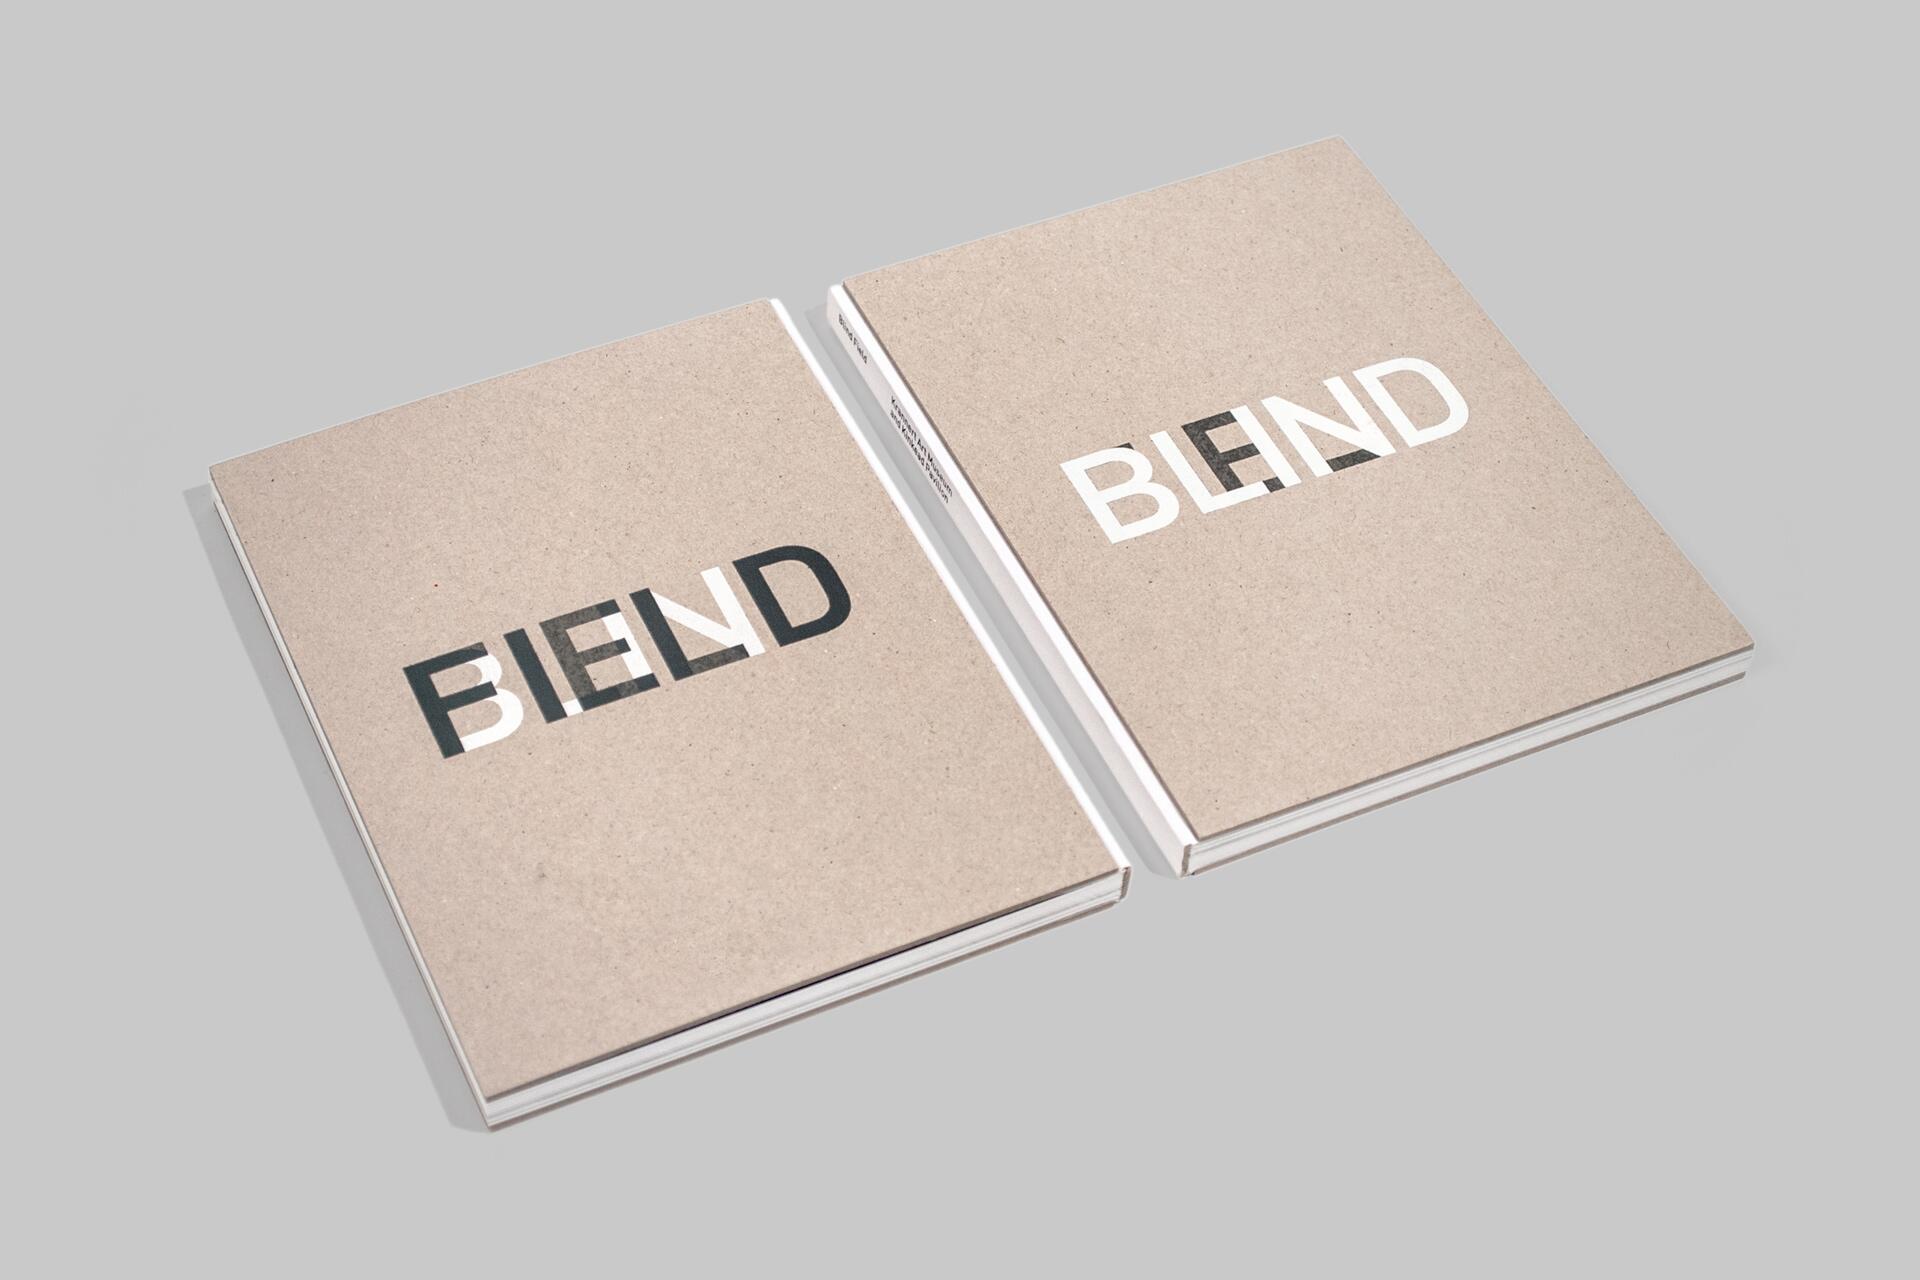 16C-102_Blind Field exhibition catalog_Silja Hillman/J. Brad Sturm/Cheryl Towler-Weese